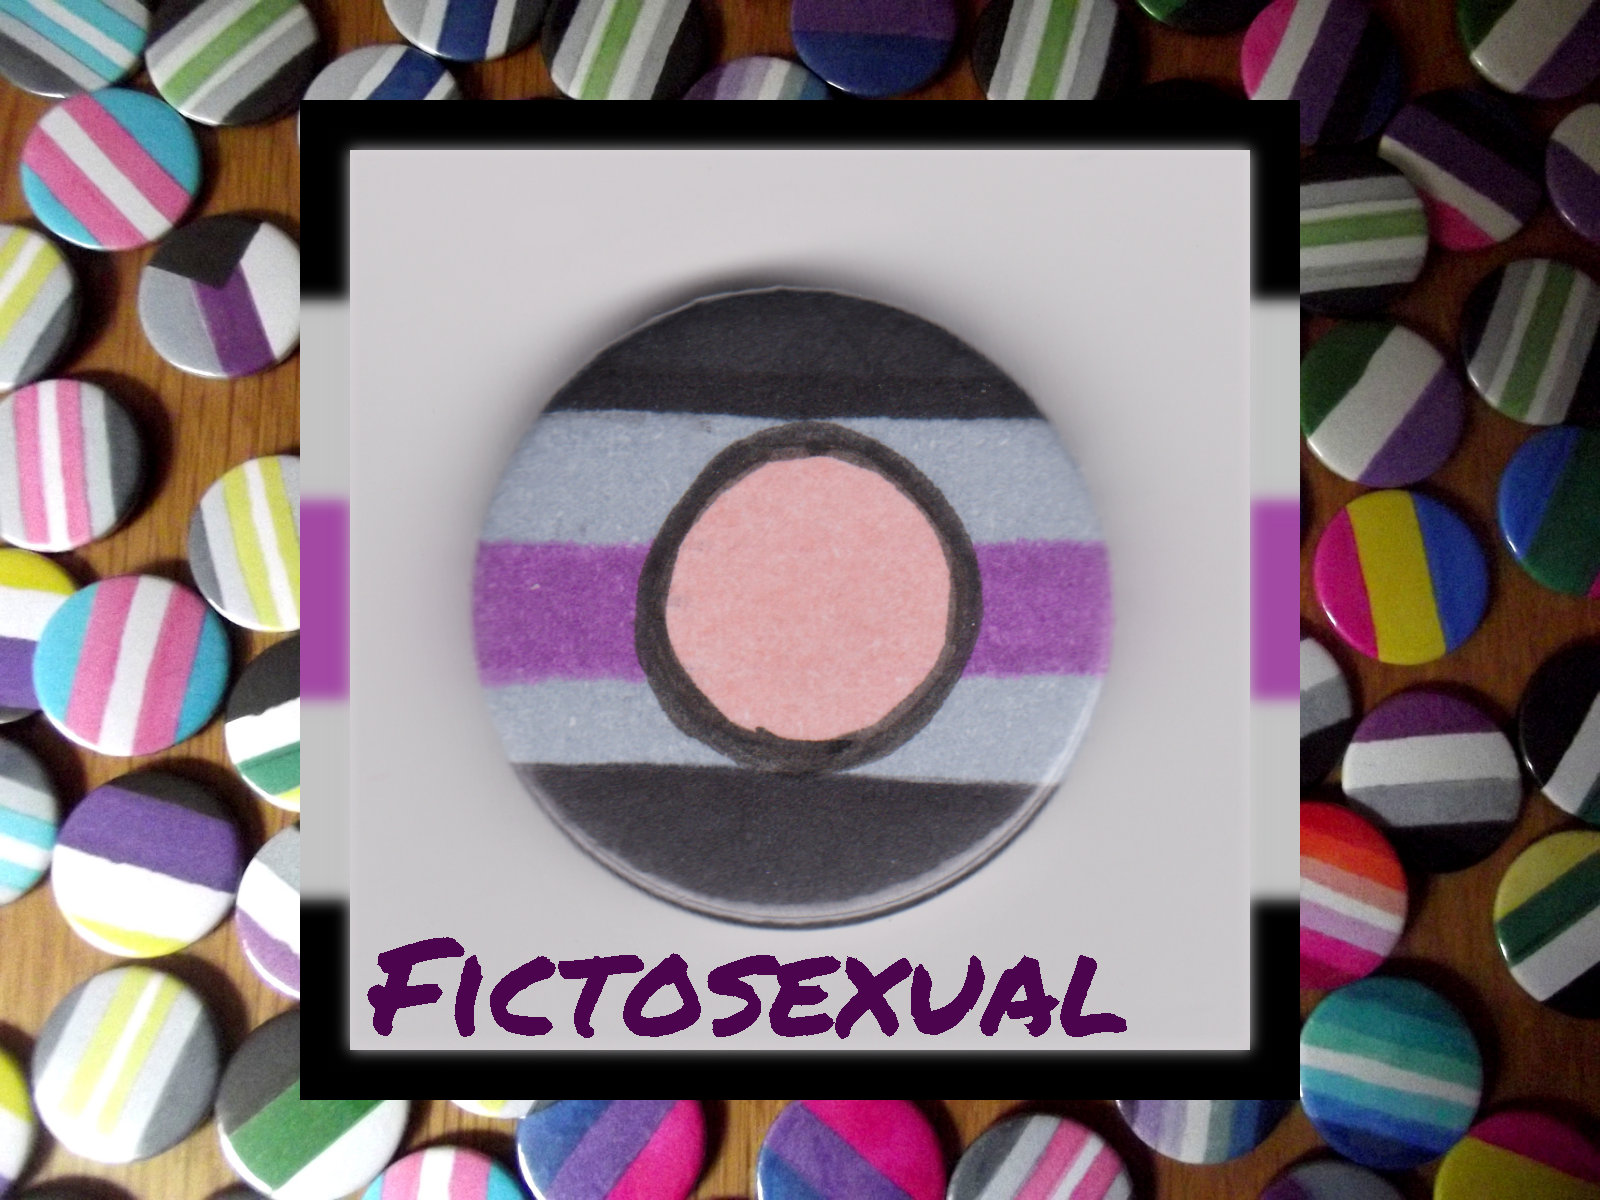 Fictosexual Pride Button Badge